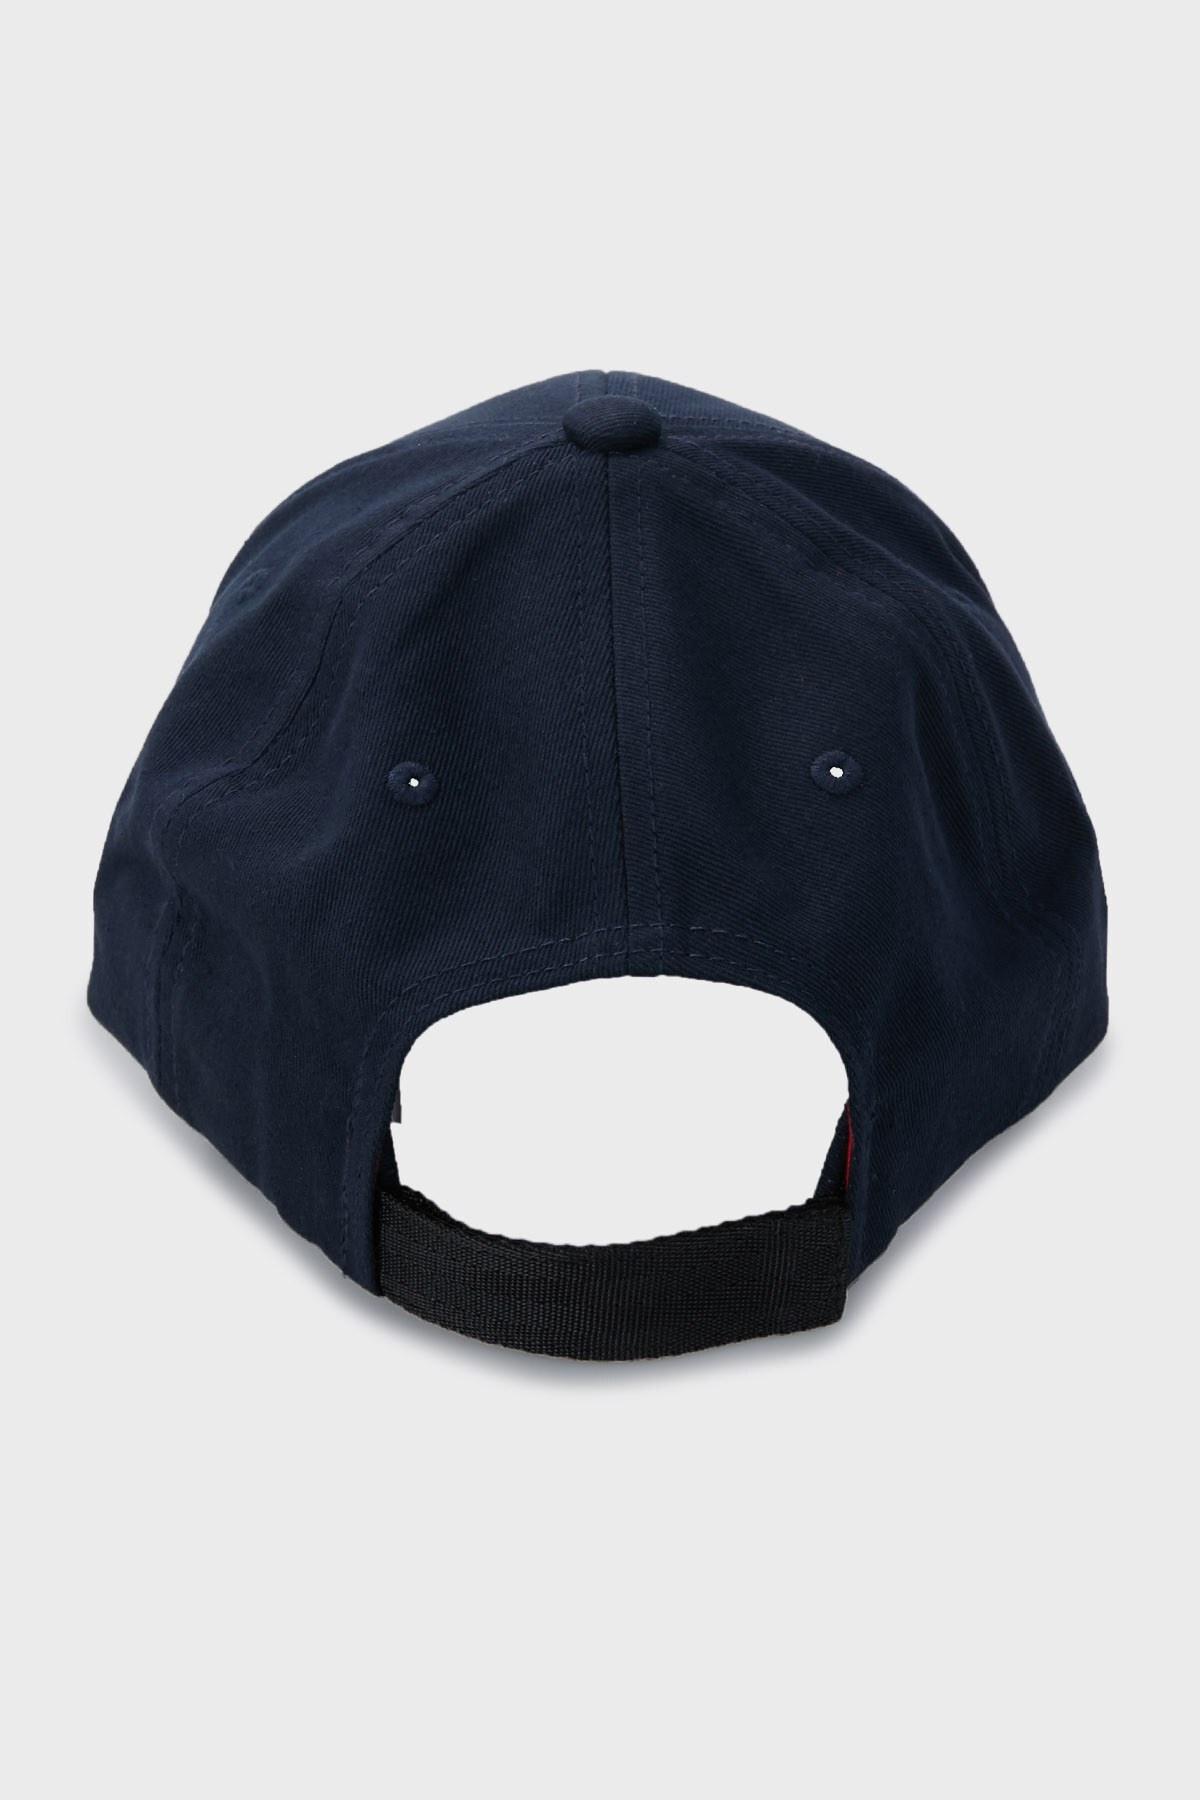 Hugo Pamuklu Logo Detaylı Erkek Şapka 50449455 405 LACİVERT